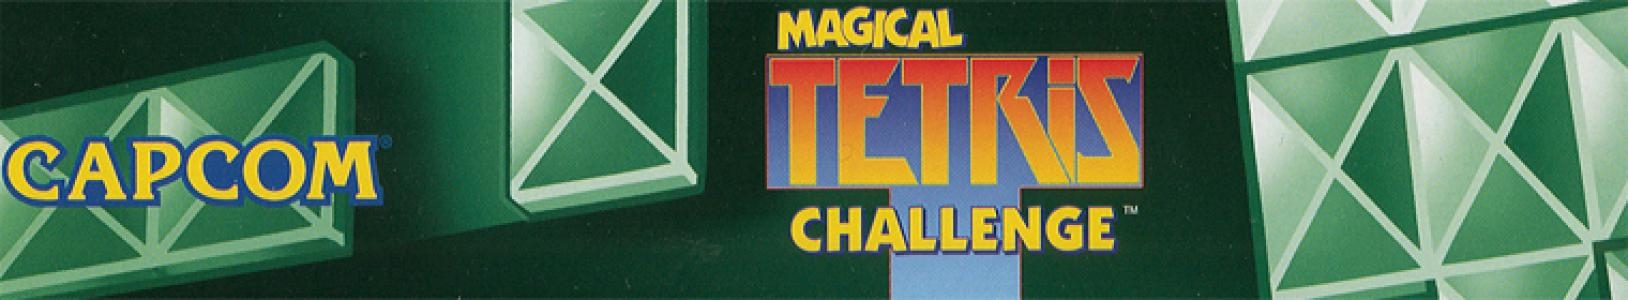 Magical Tetris Challenge banner